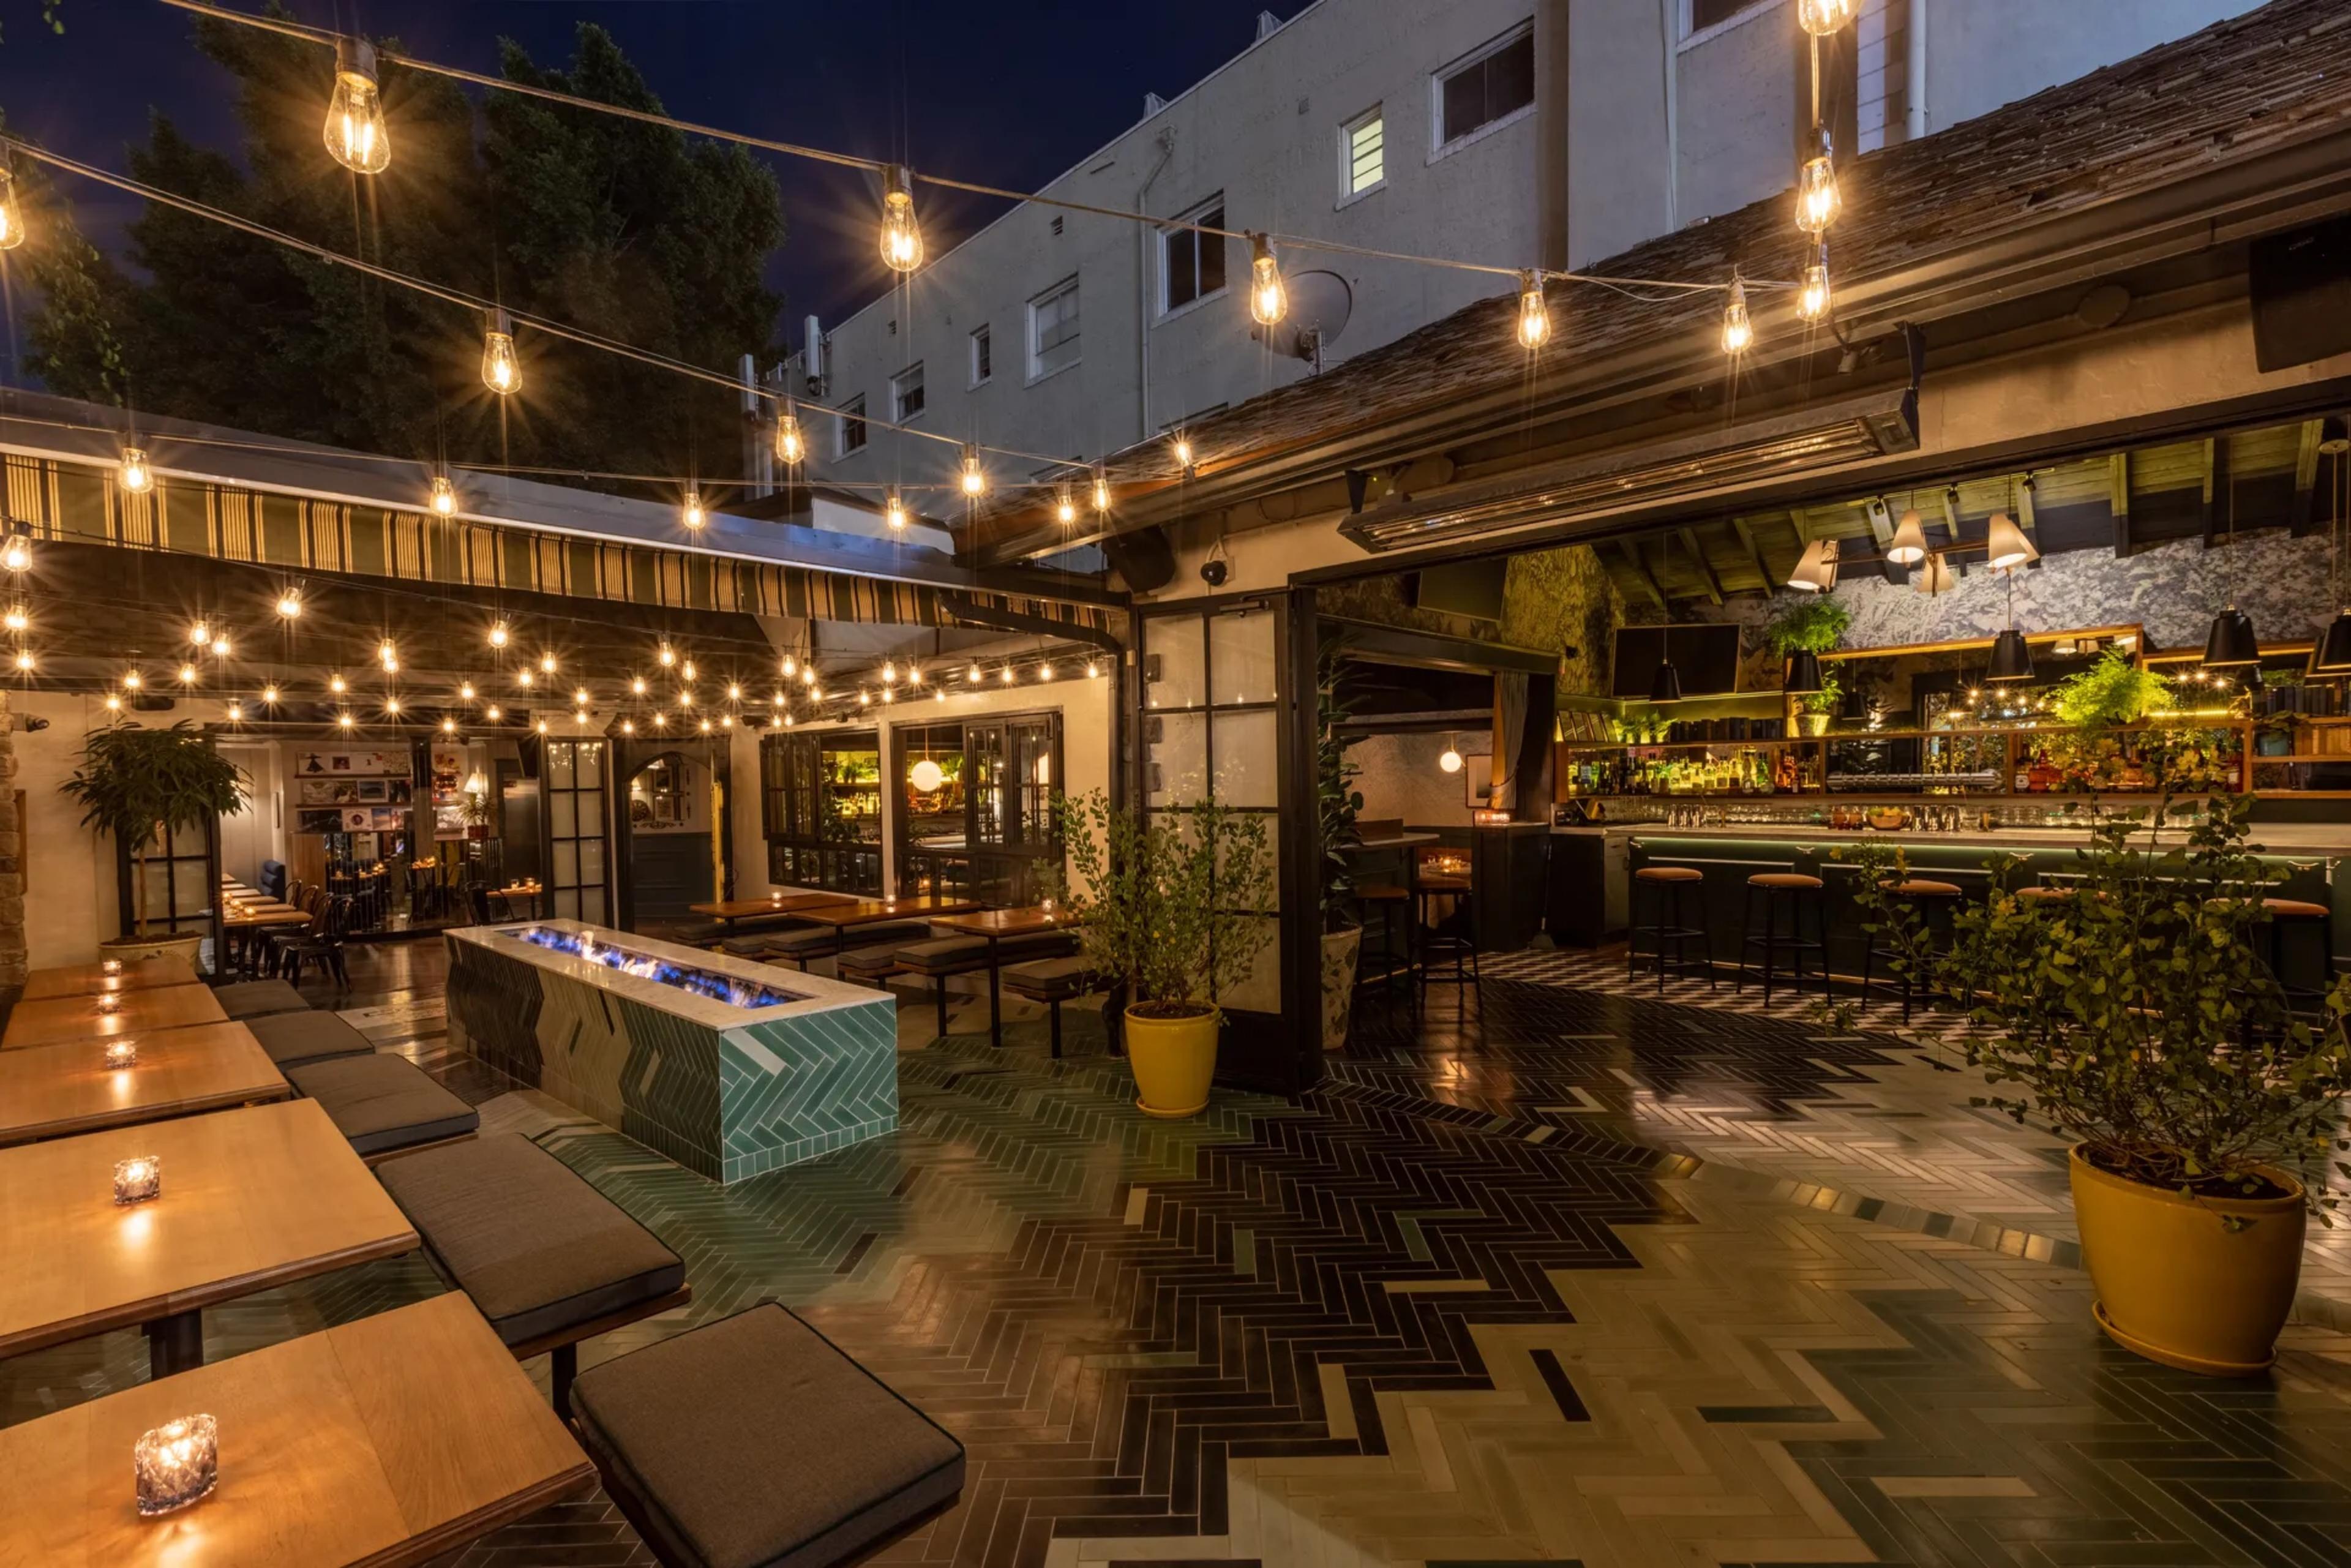 The Den on Sunset - West Hollywood Restaurant & Bar